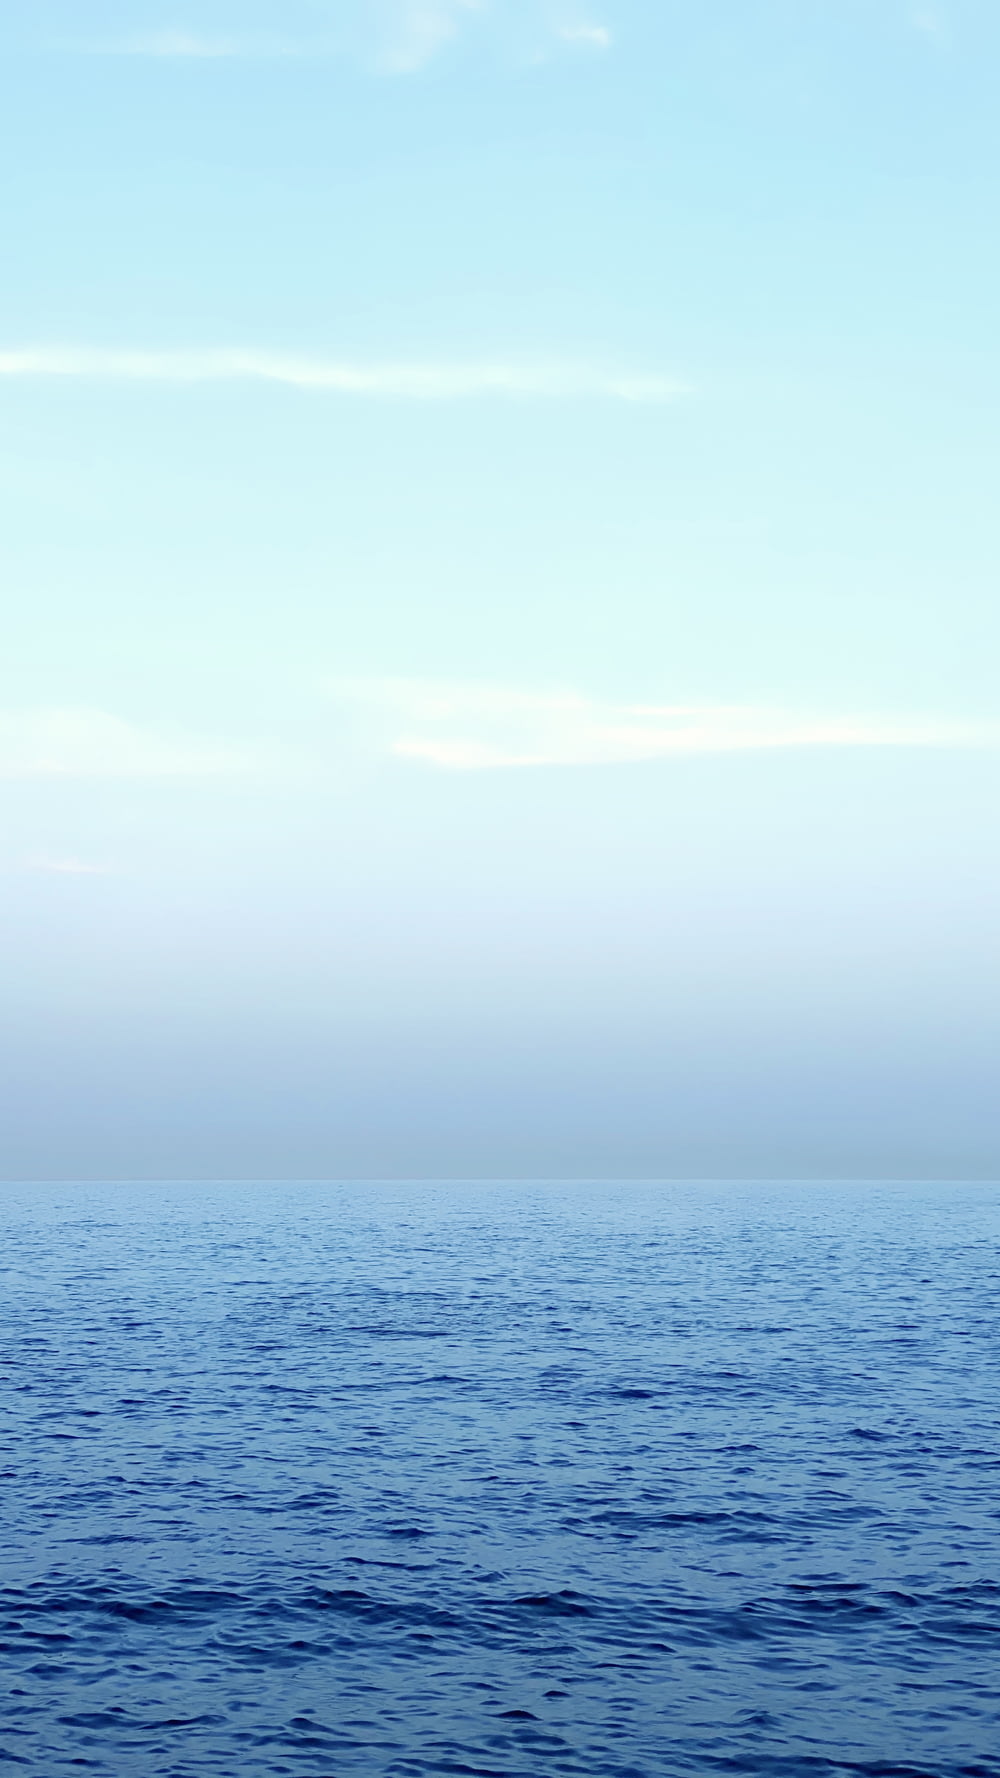 blue sea under white sky during daytime